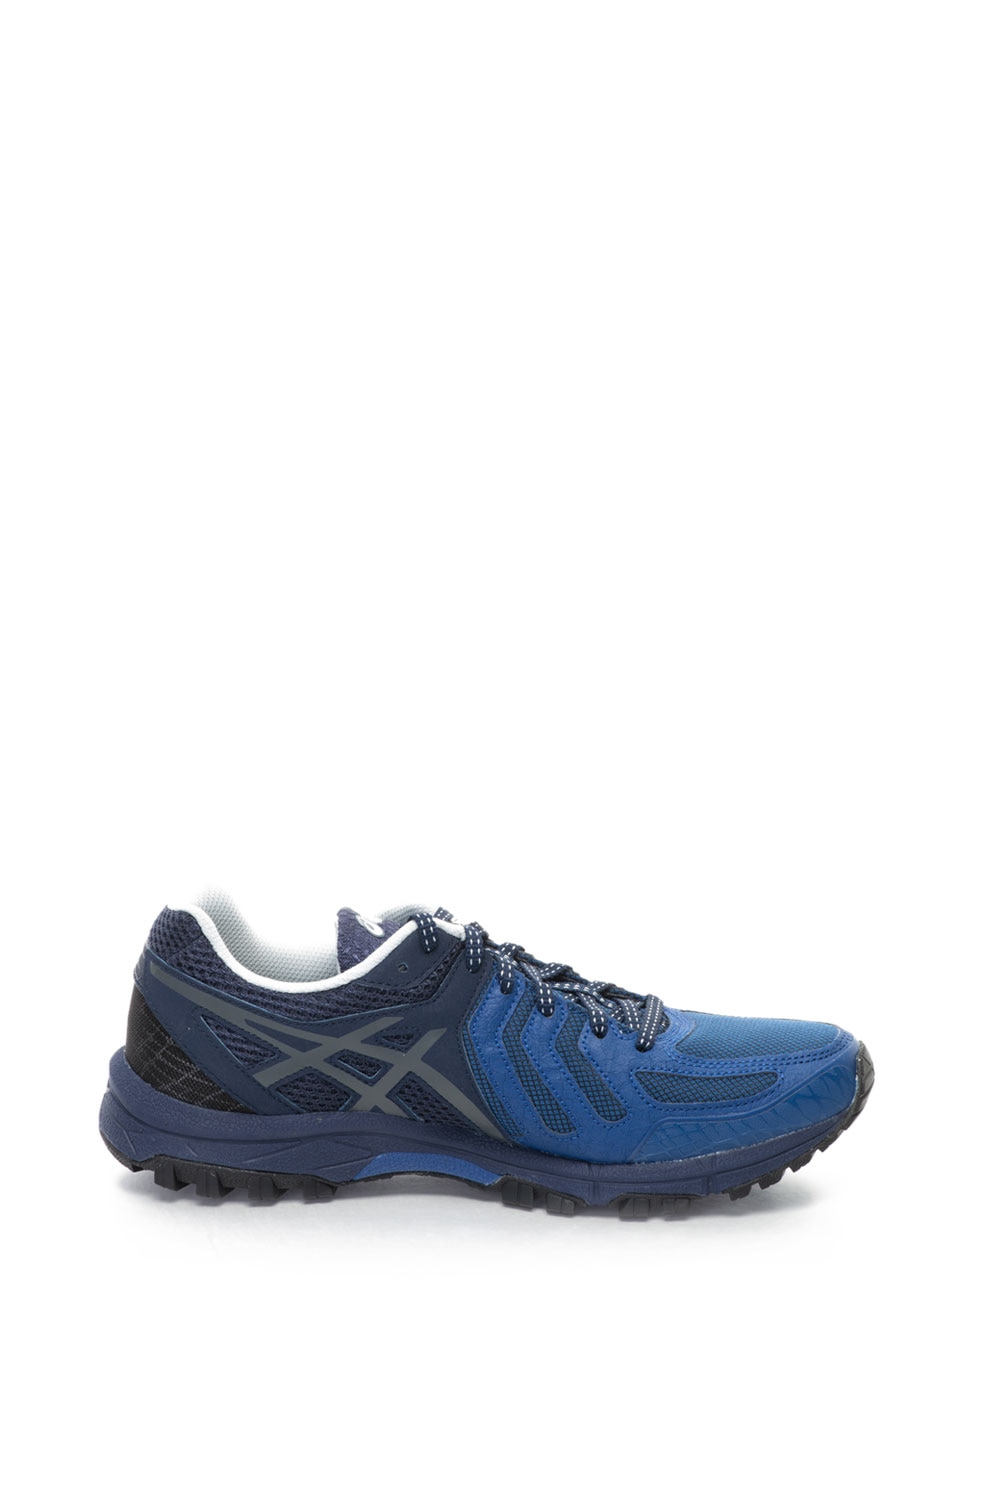 Asics Gel-Fuji Attack Trail Running Shoes Blue Runnerinn